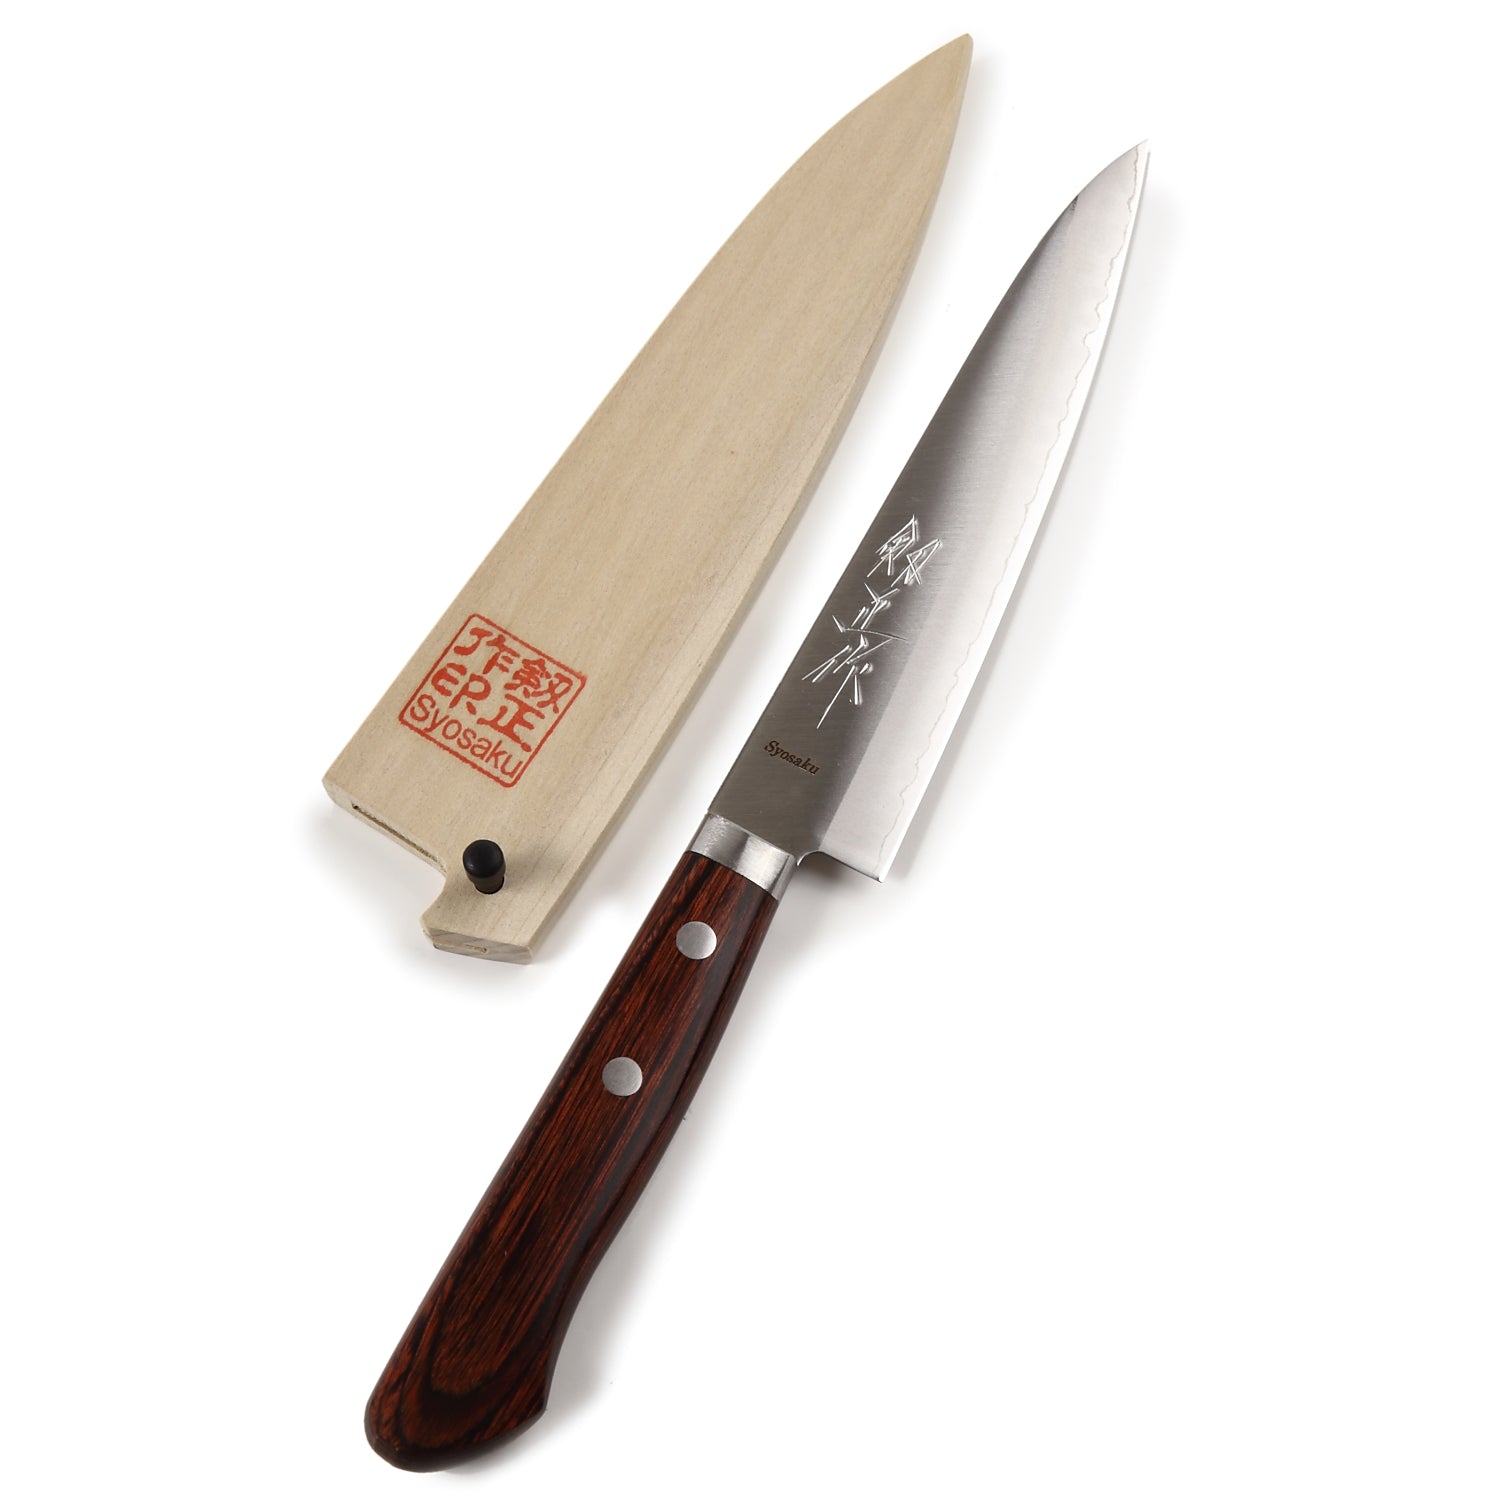 Syosaku Japanese Petty Best Sharp Kitchen Chef Knife VG-1 Gold Stainless Steel Mahogany Handle, 5.3-inch (135mm) with Magnolia Wood Sheath Saya Cover - Syosaku-Japan